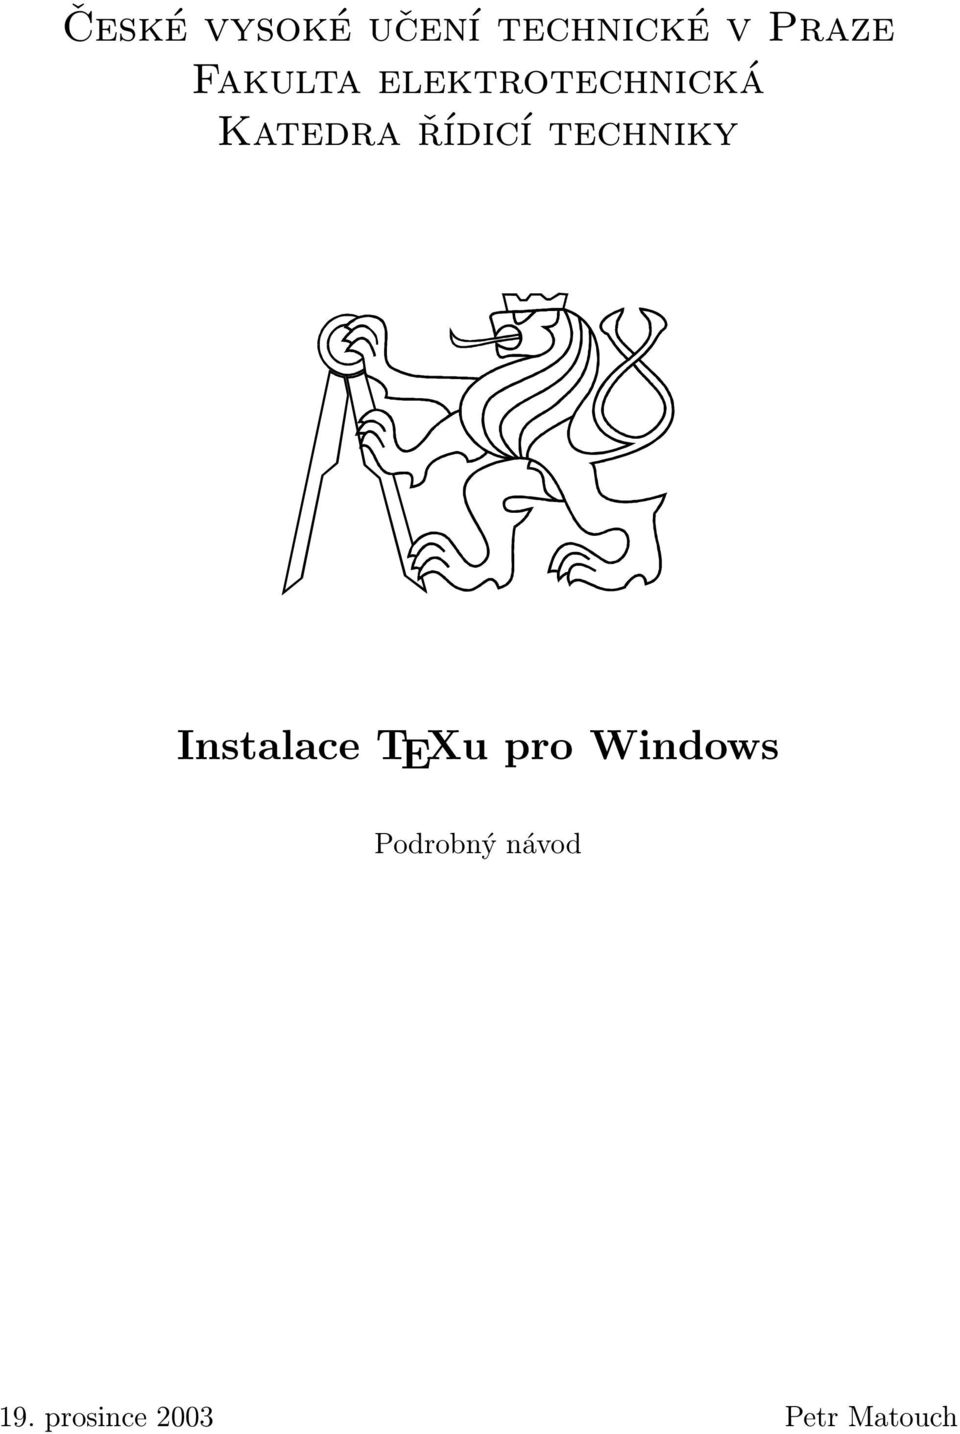 techniky Instalace TEXu pro Windows